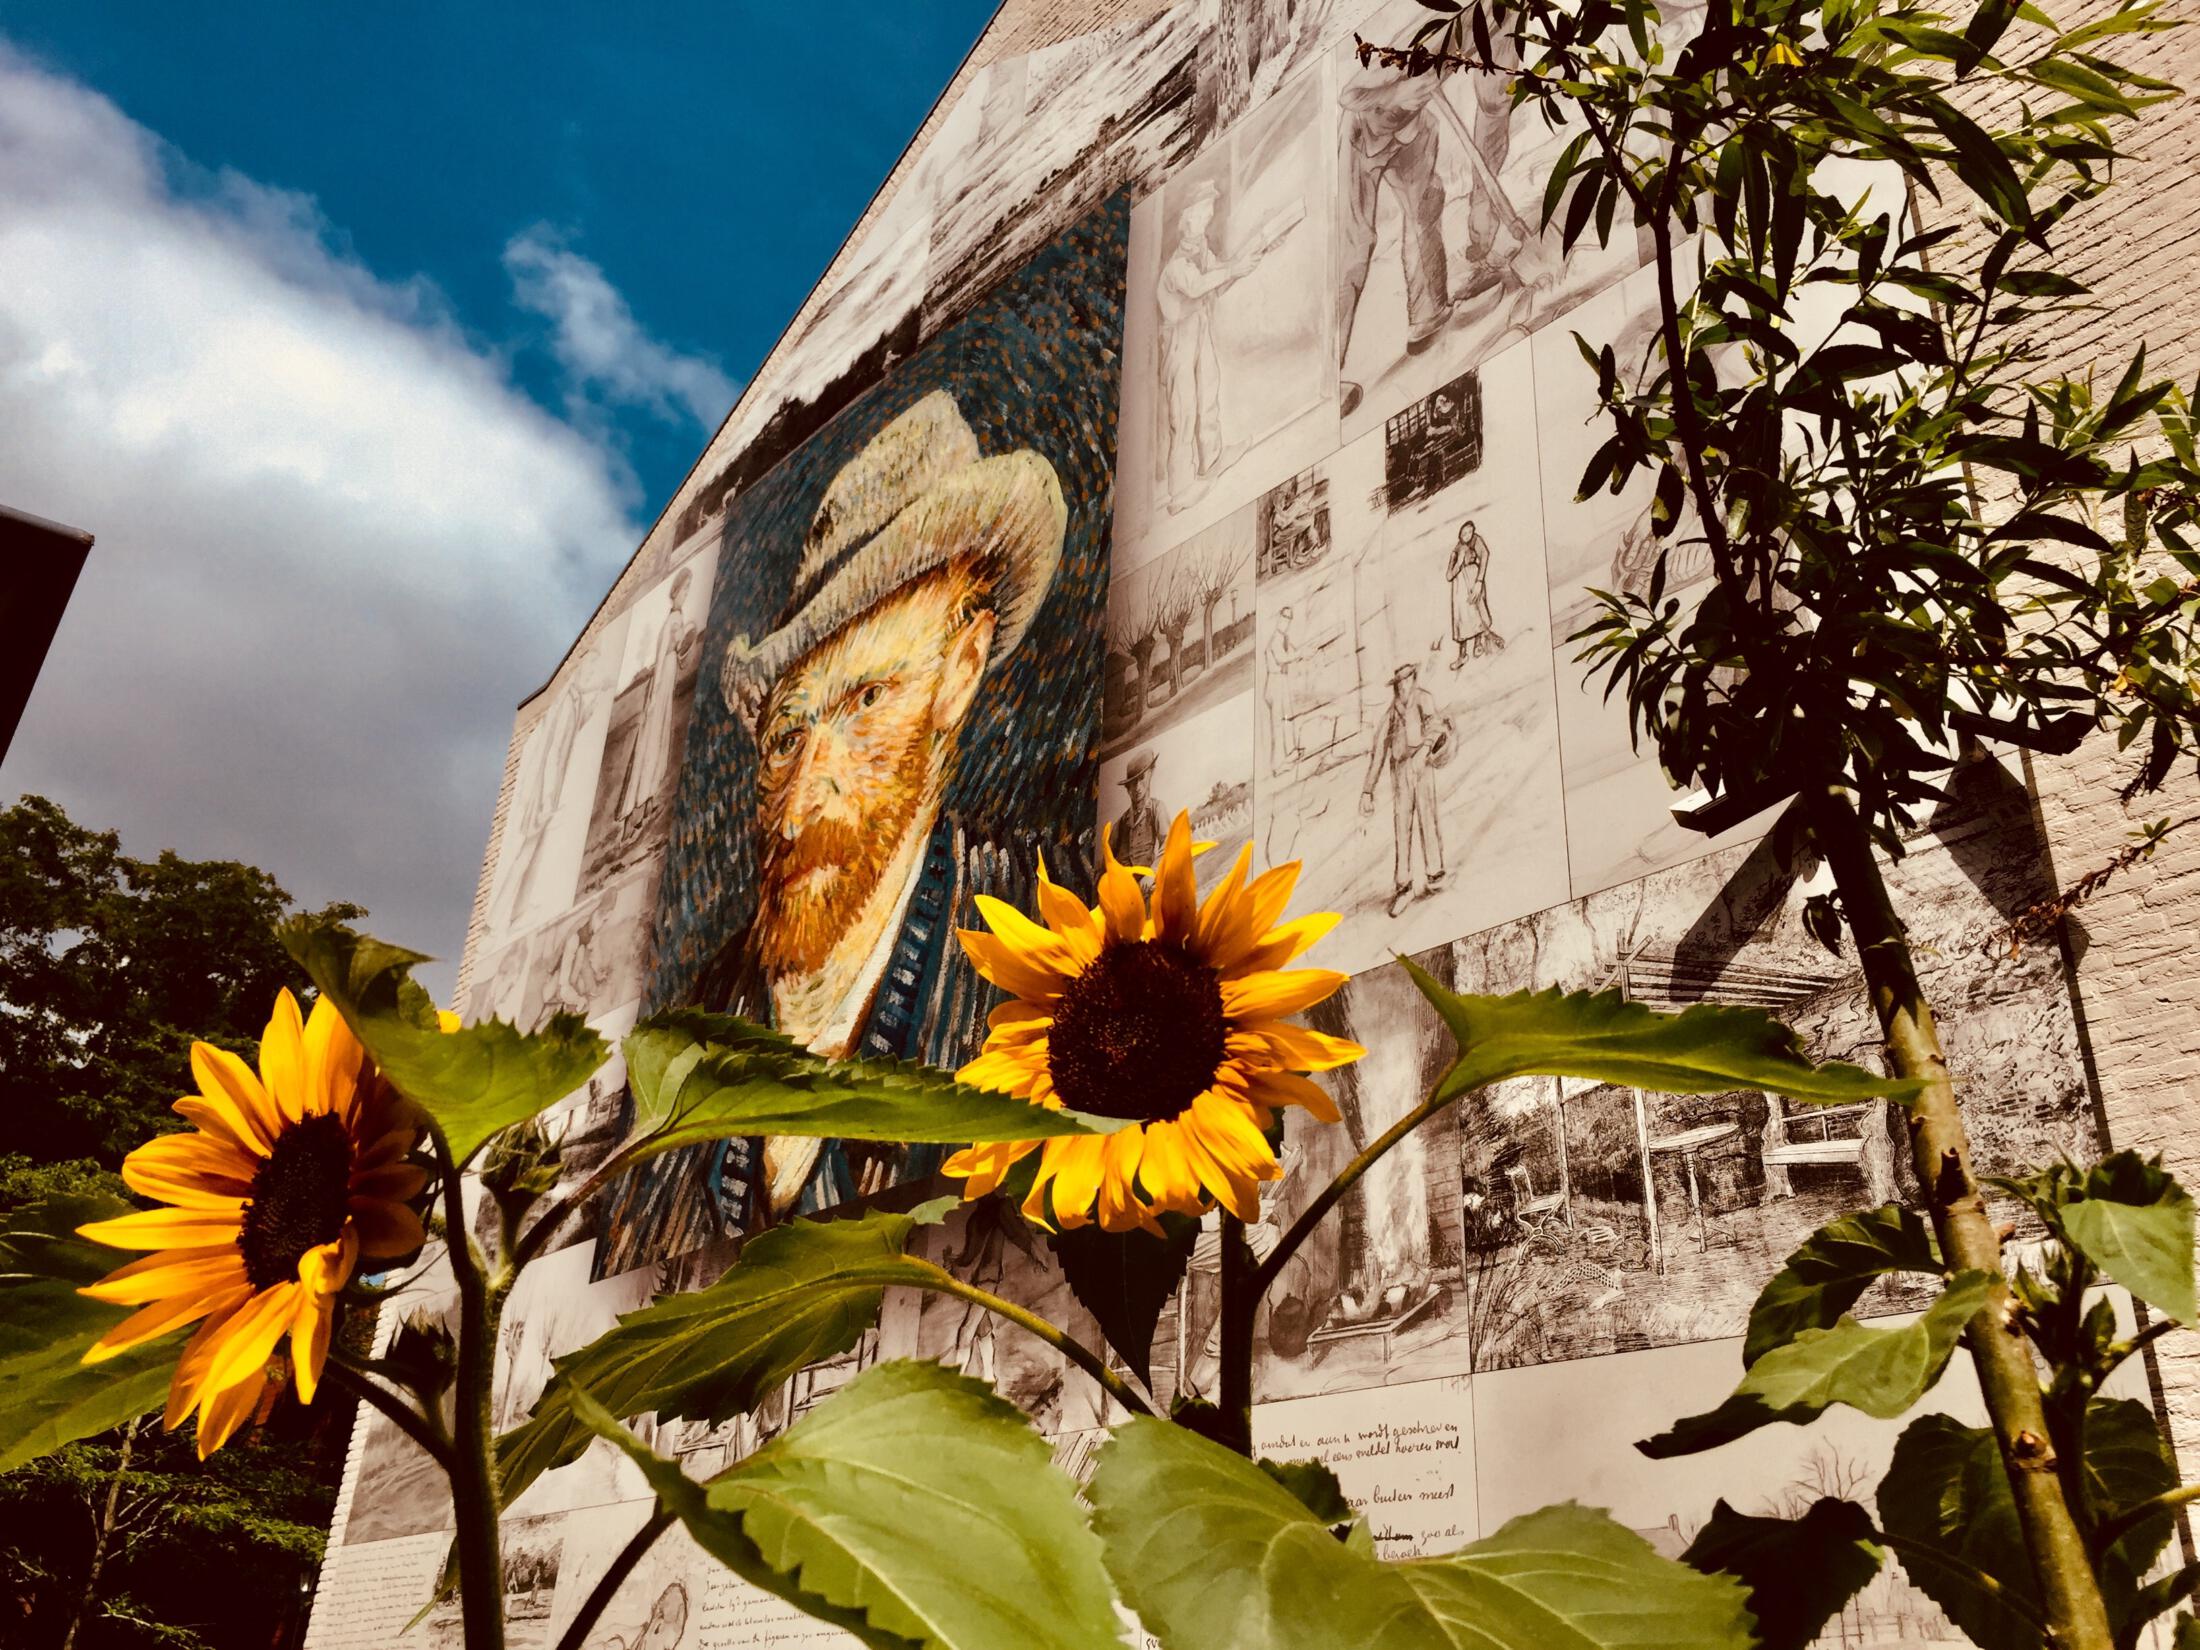 Van Gogh Wall - Etten-Leur